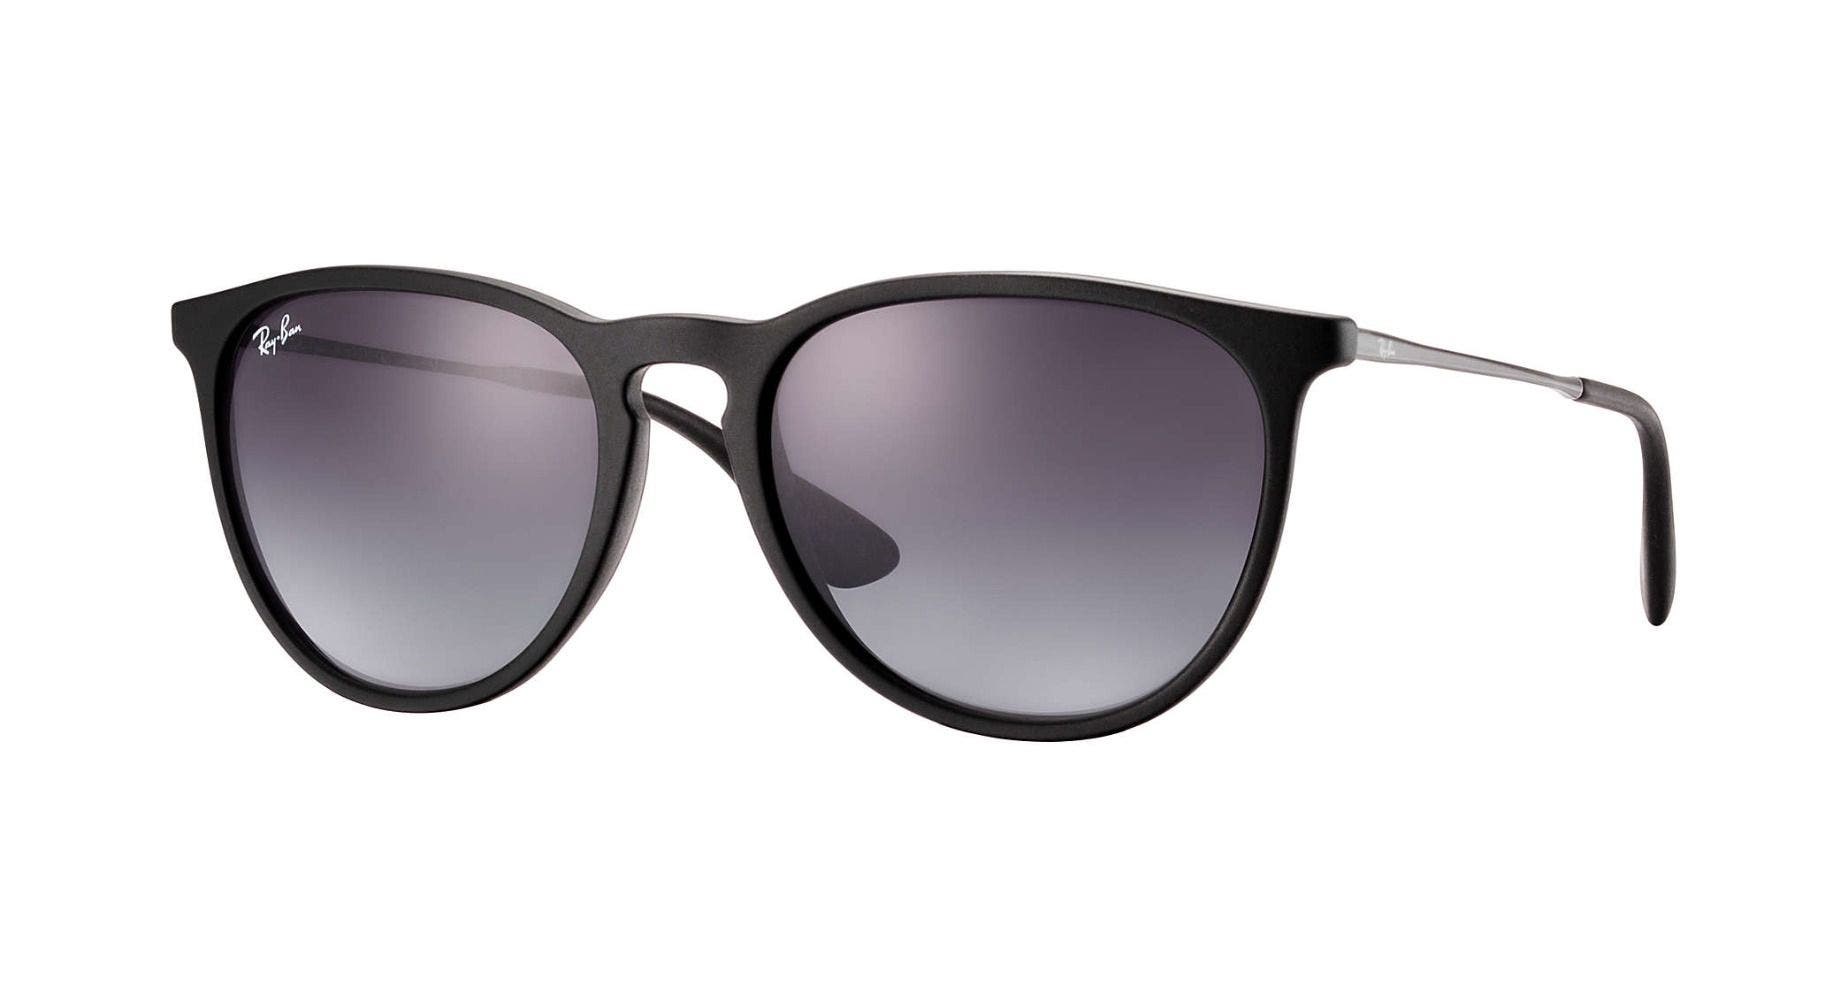 Most Popular Ray-Ban Sunglasses | Customer Favorites | SportRx